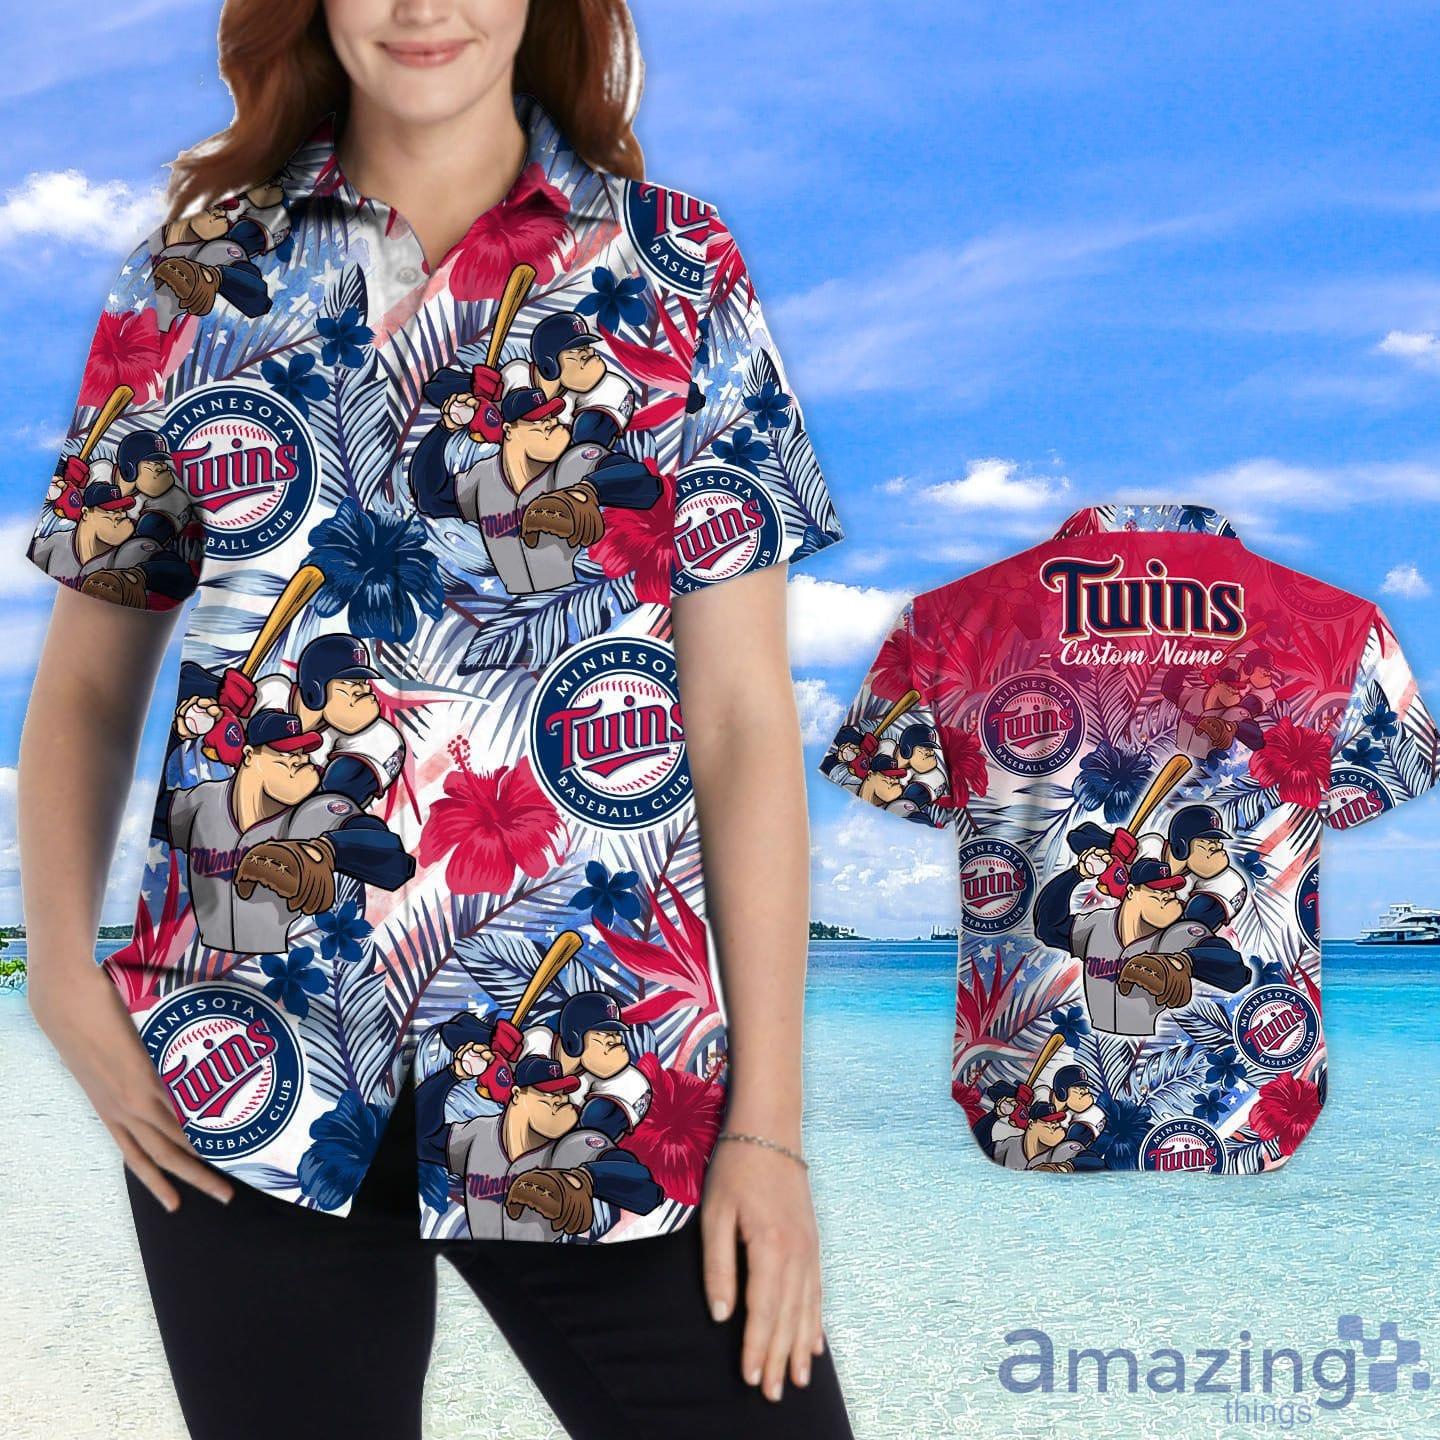 Minnesota Twins MLB Flower Hawaiian Shirt Unique Gift For Men